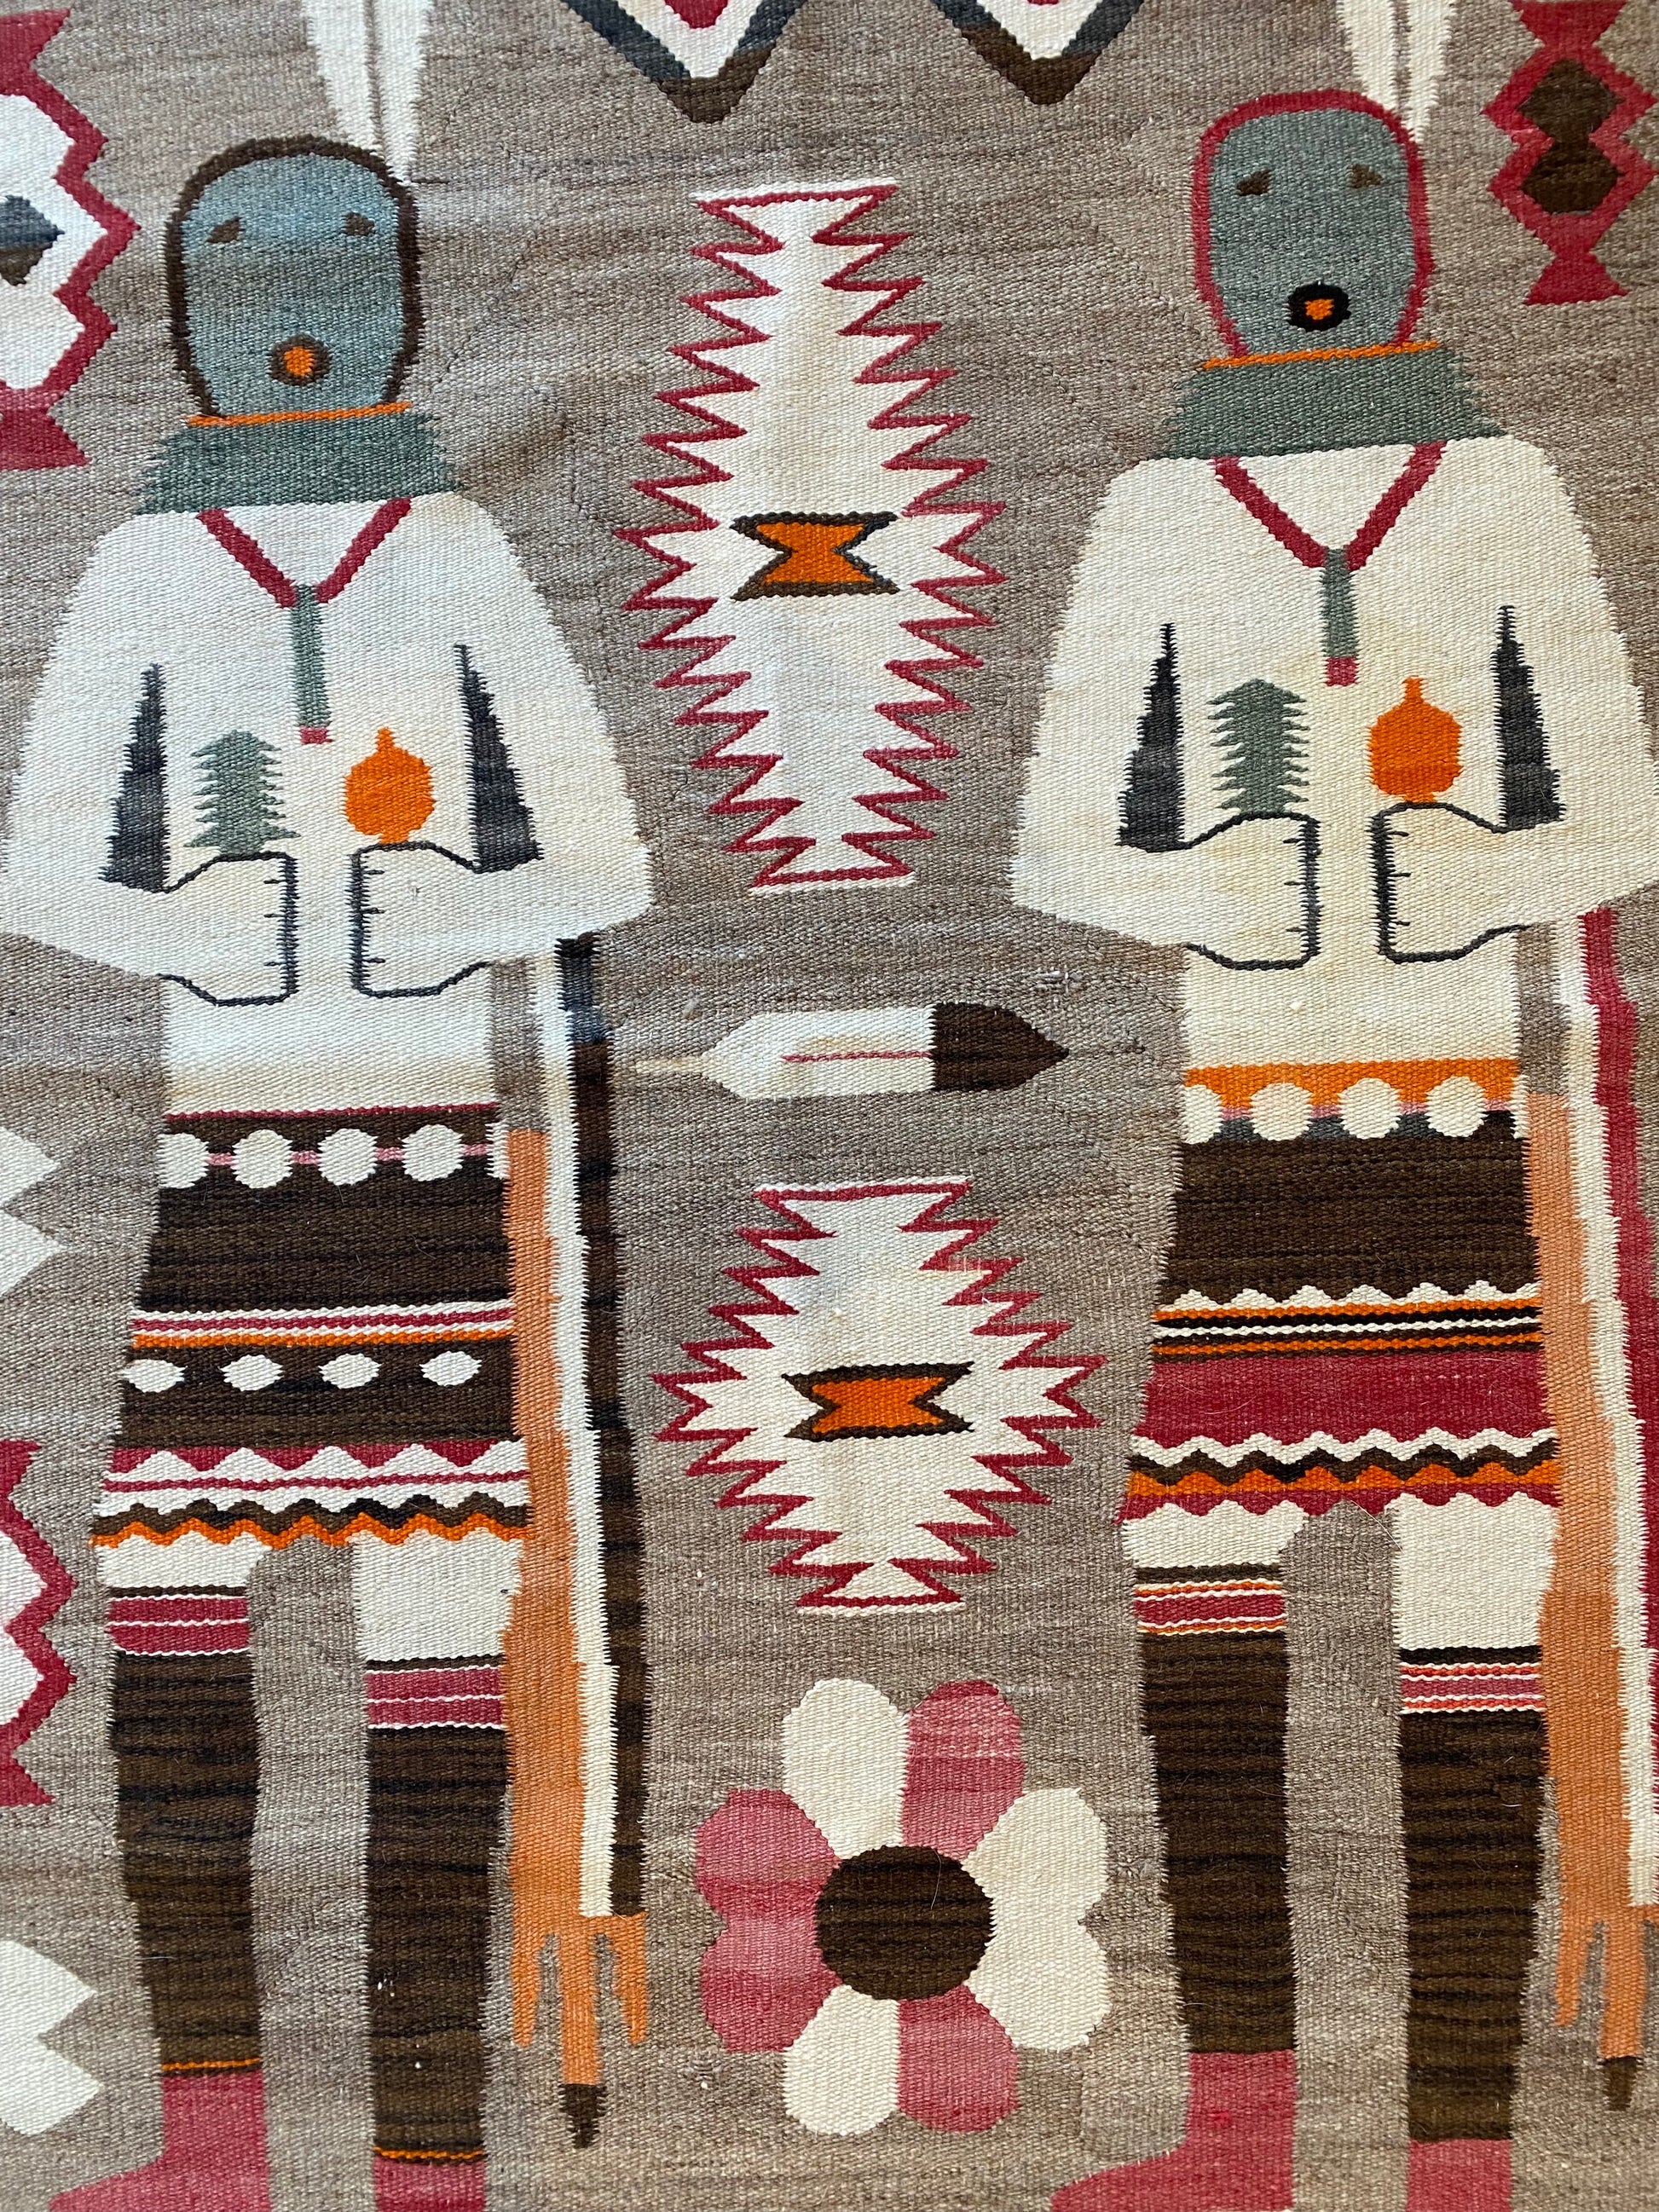 Antique navajo rug weaving yei-be-chai telluride co, navajo rug for sale, southwestern rug, native american rug